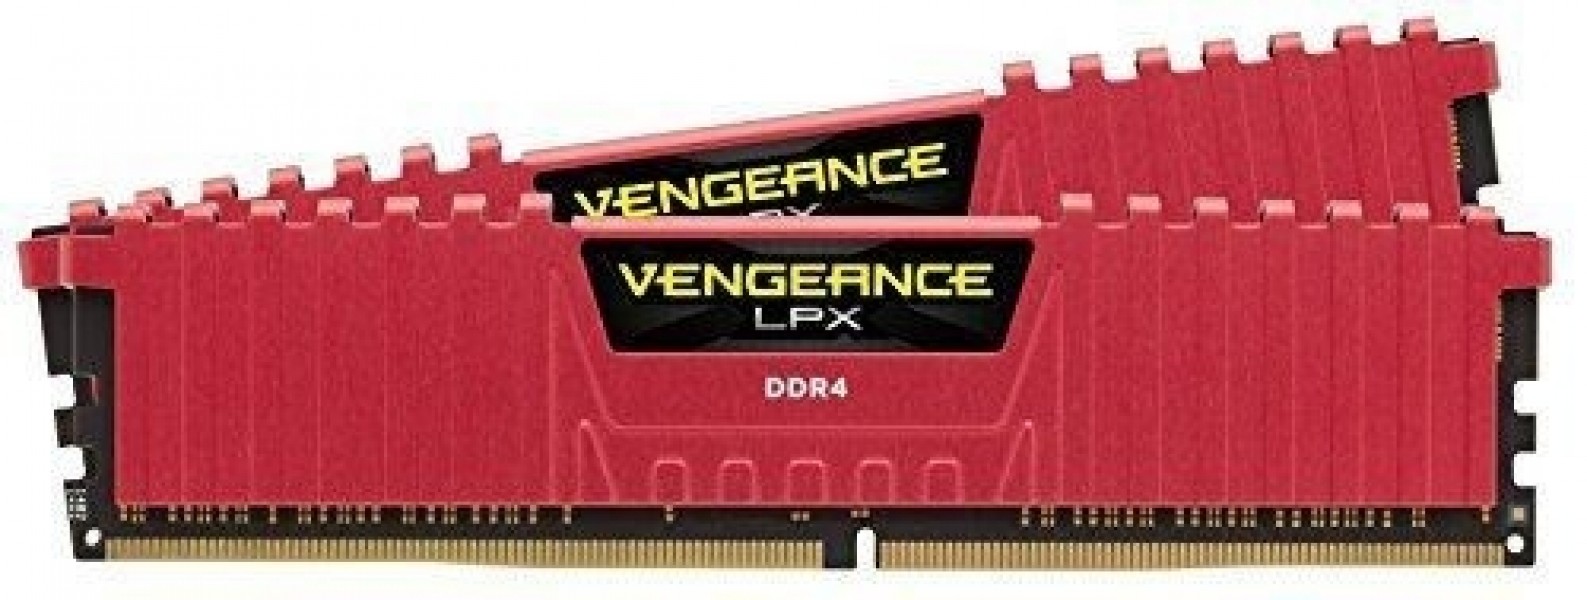 Corsair Vengeance LPX 16GB 2400MHz DDR4 CL14 KIT OF 2 CMK16GX4M2A2400C14R